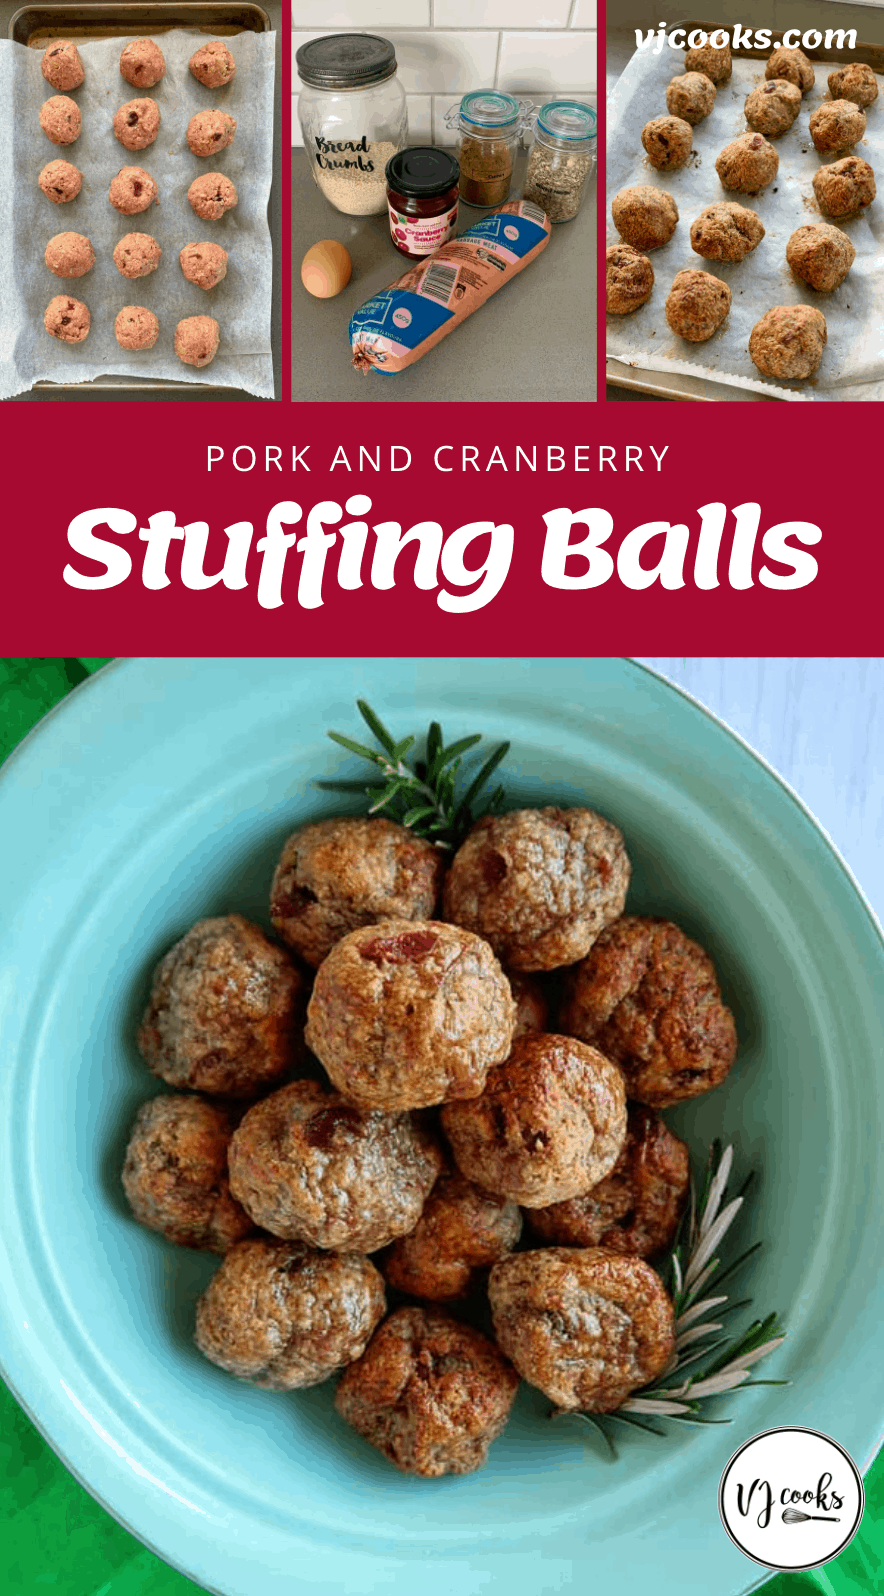 Stuffing balls